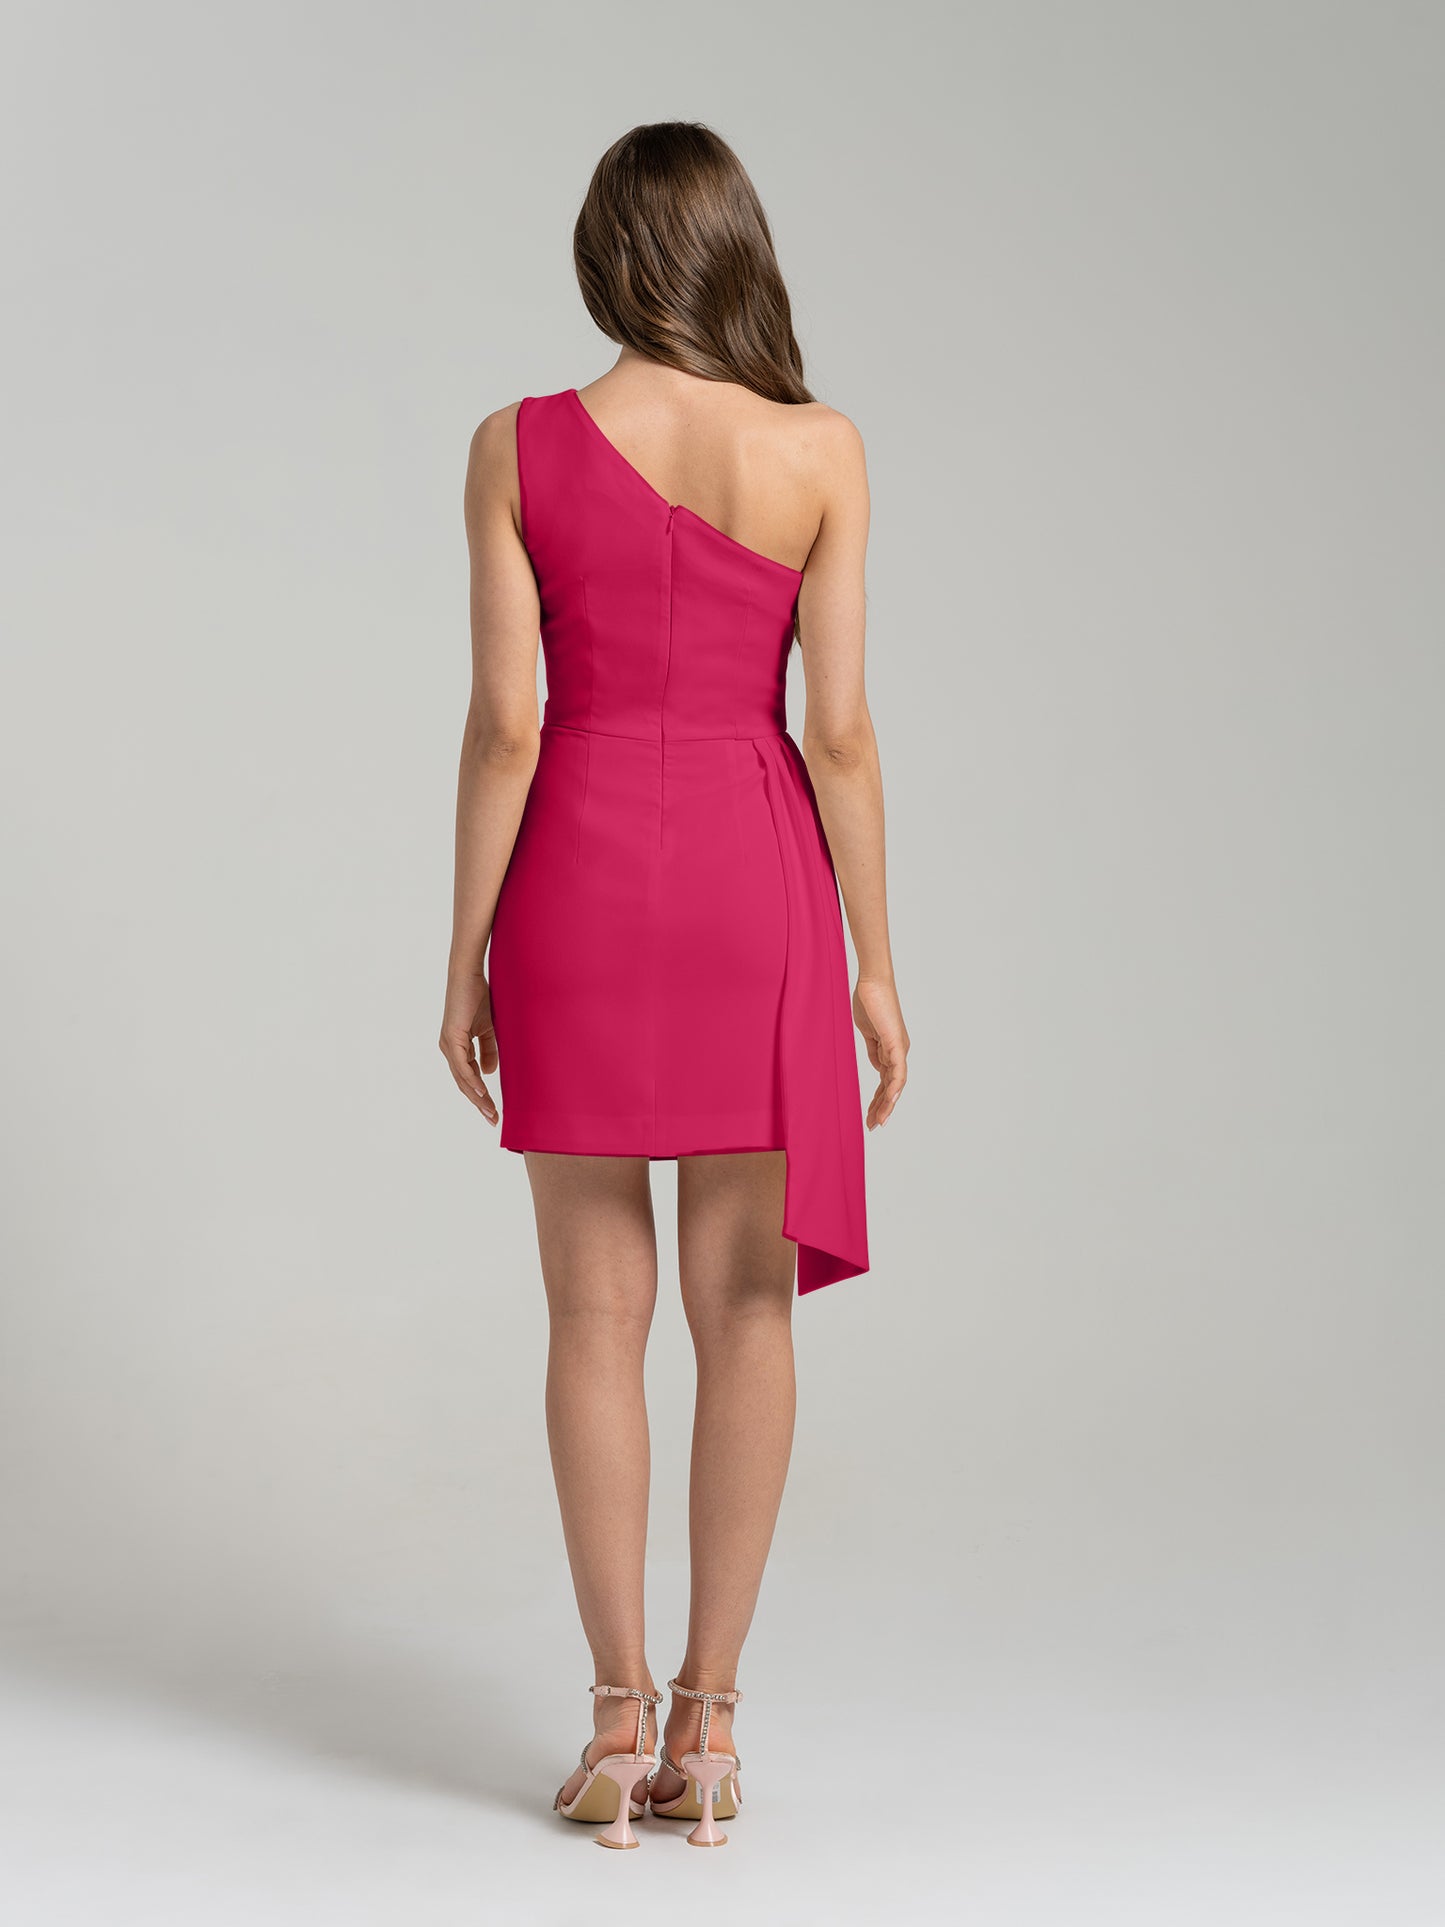 Iconic Glamour Short Dress - Hot Pink